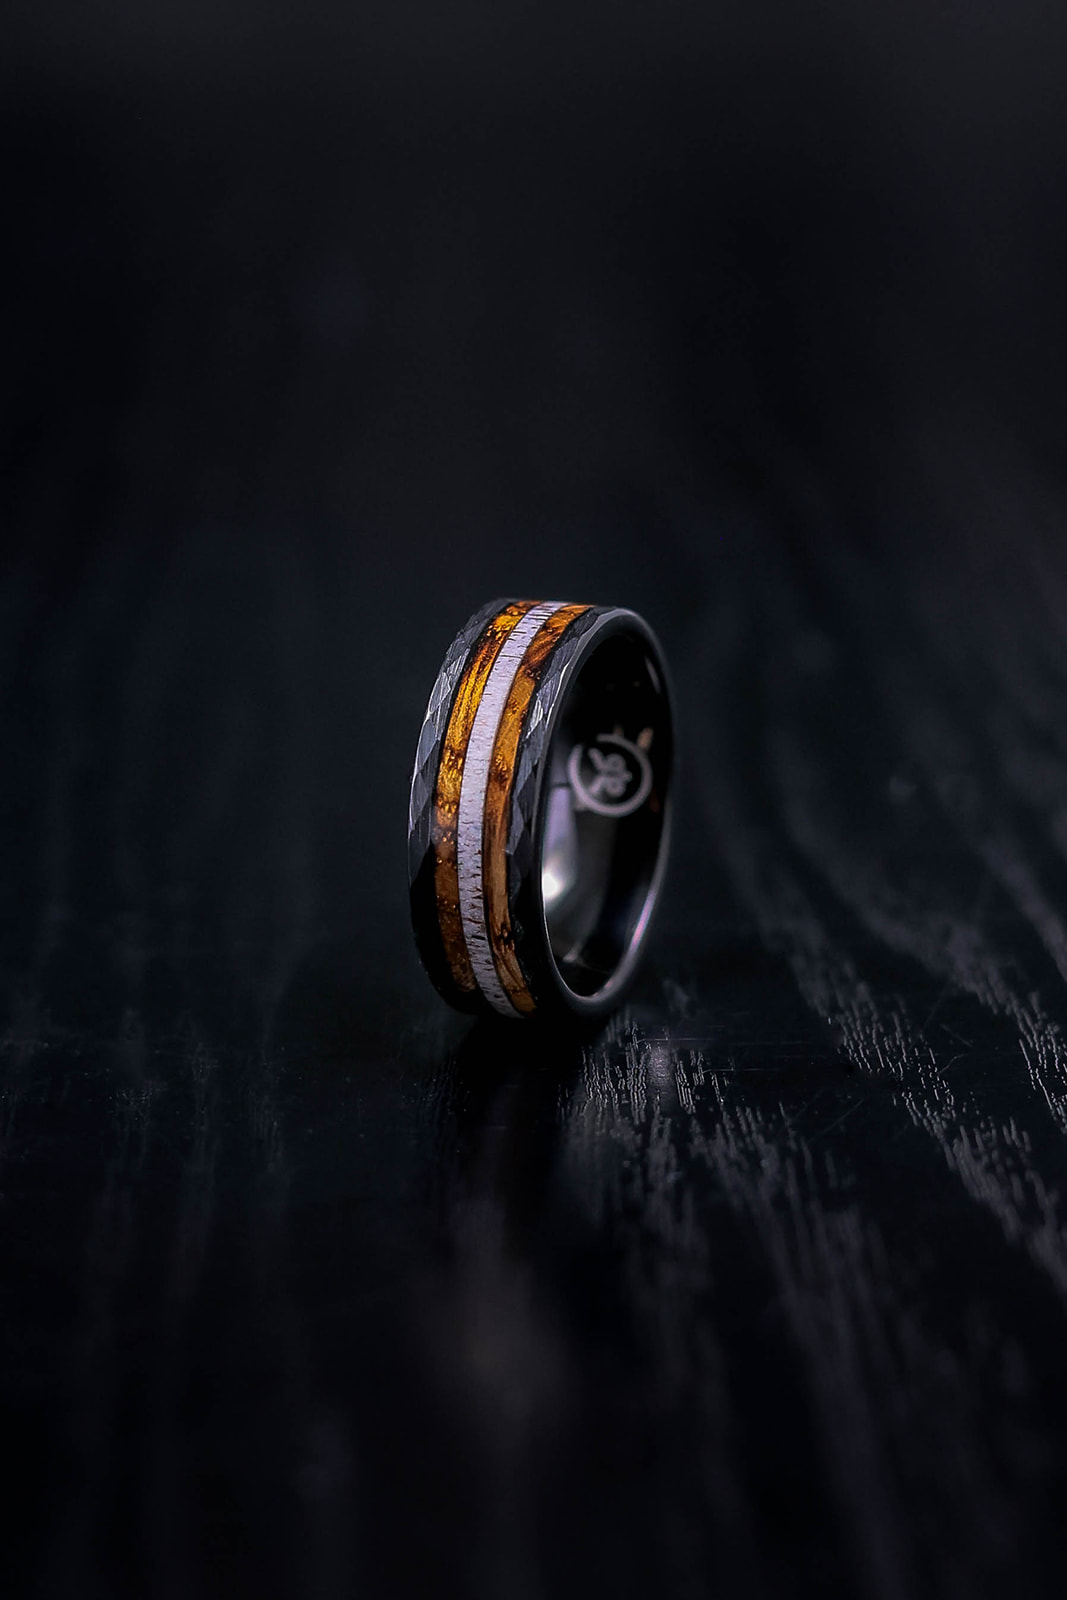 Jack Black - Black hammered tungsten wedding ring with charred whiskey barrel & deer antler inlay.